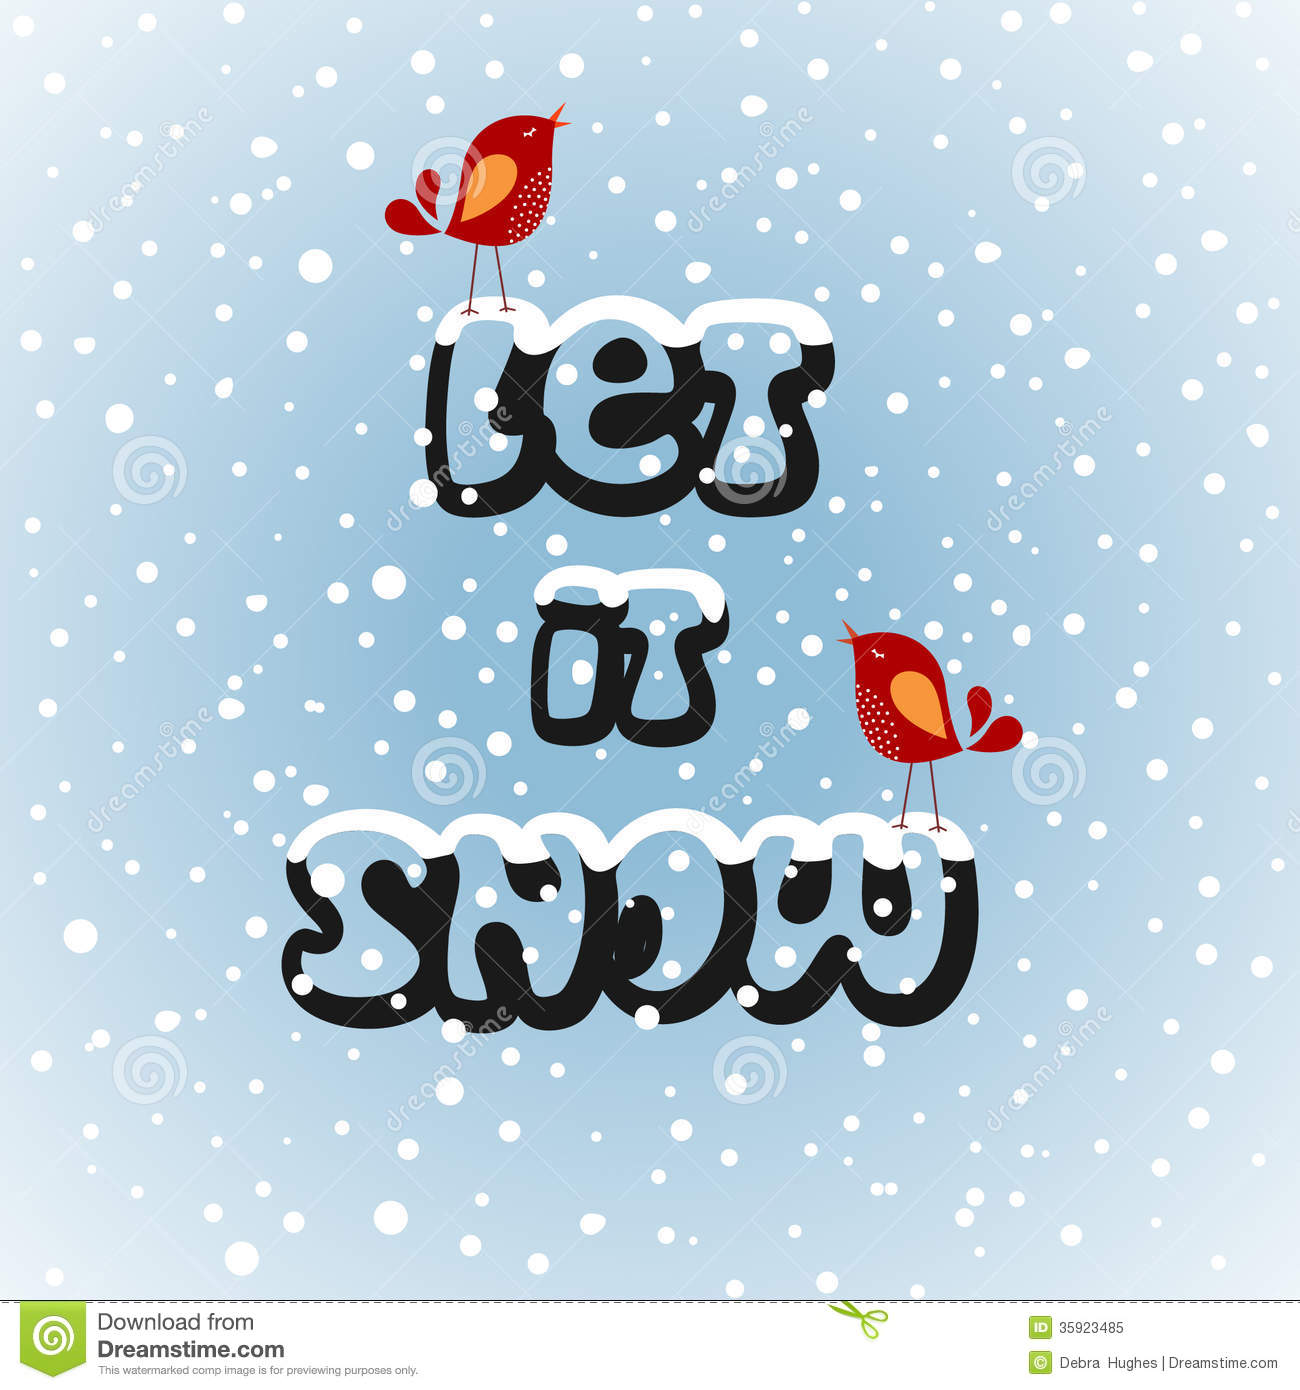 Snowbirds Wishes You Let It Snow